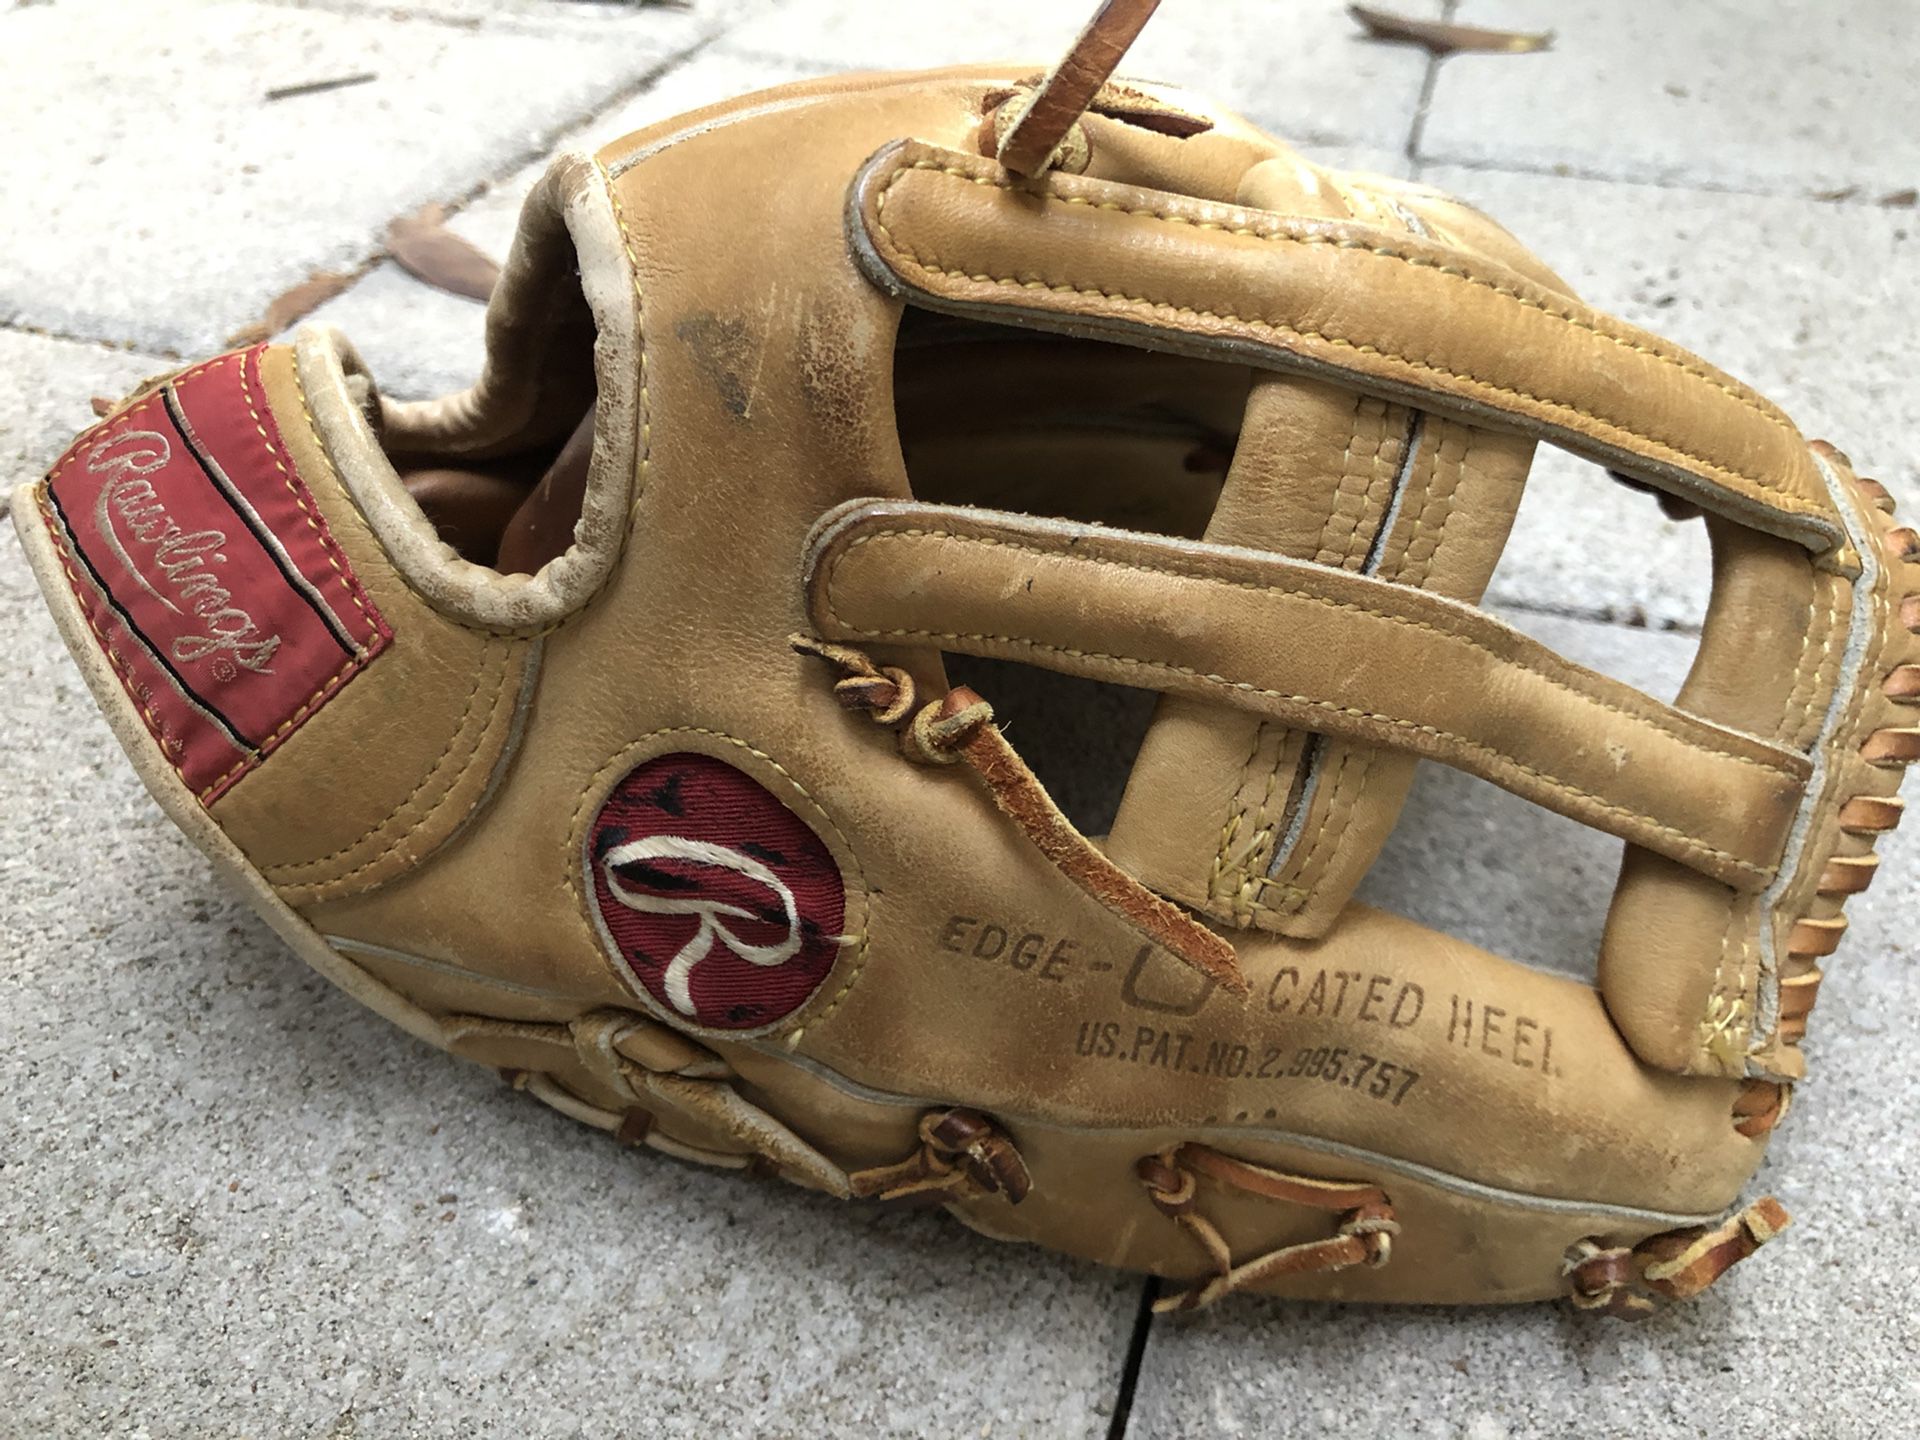 Rawlings KM10 USA made baseball glove nice quality glove collectible or ready to use!